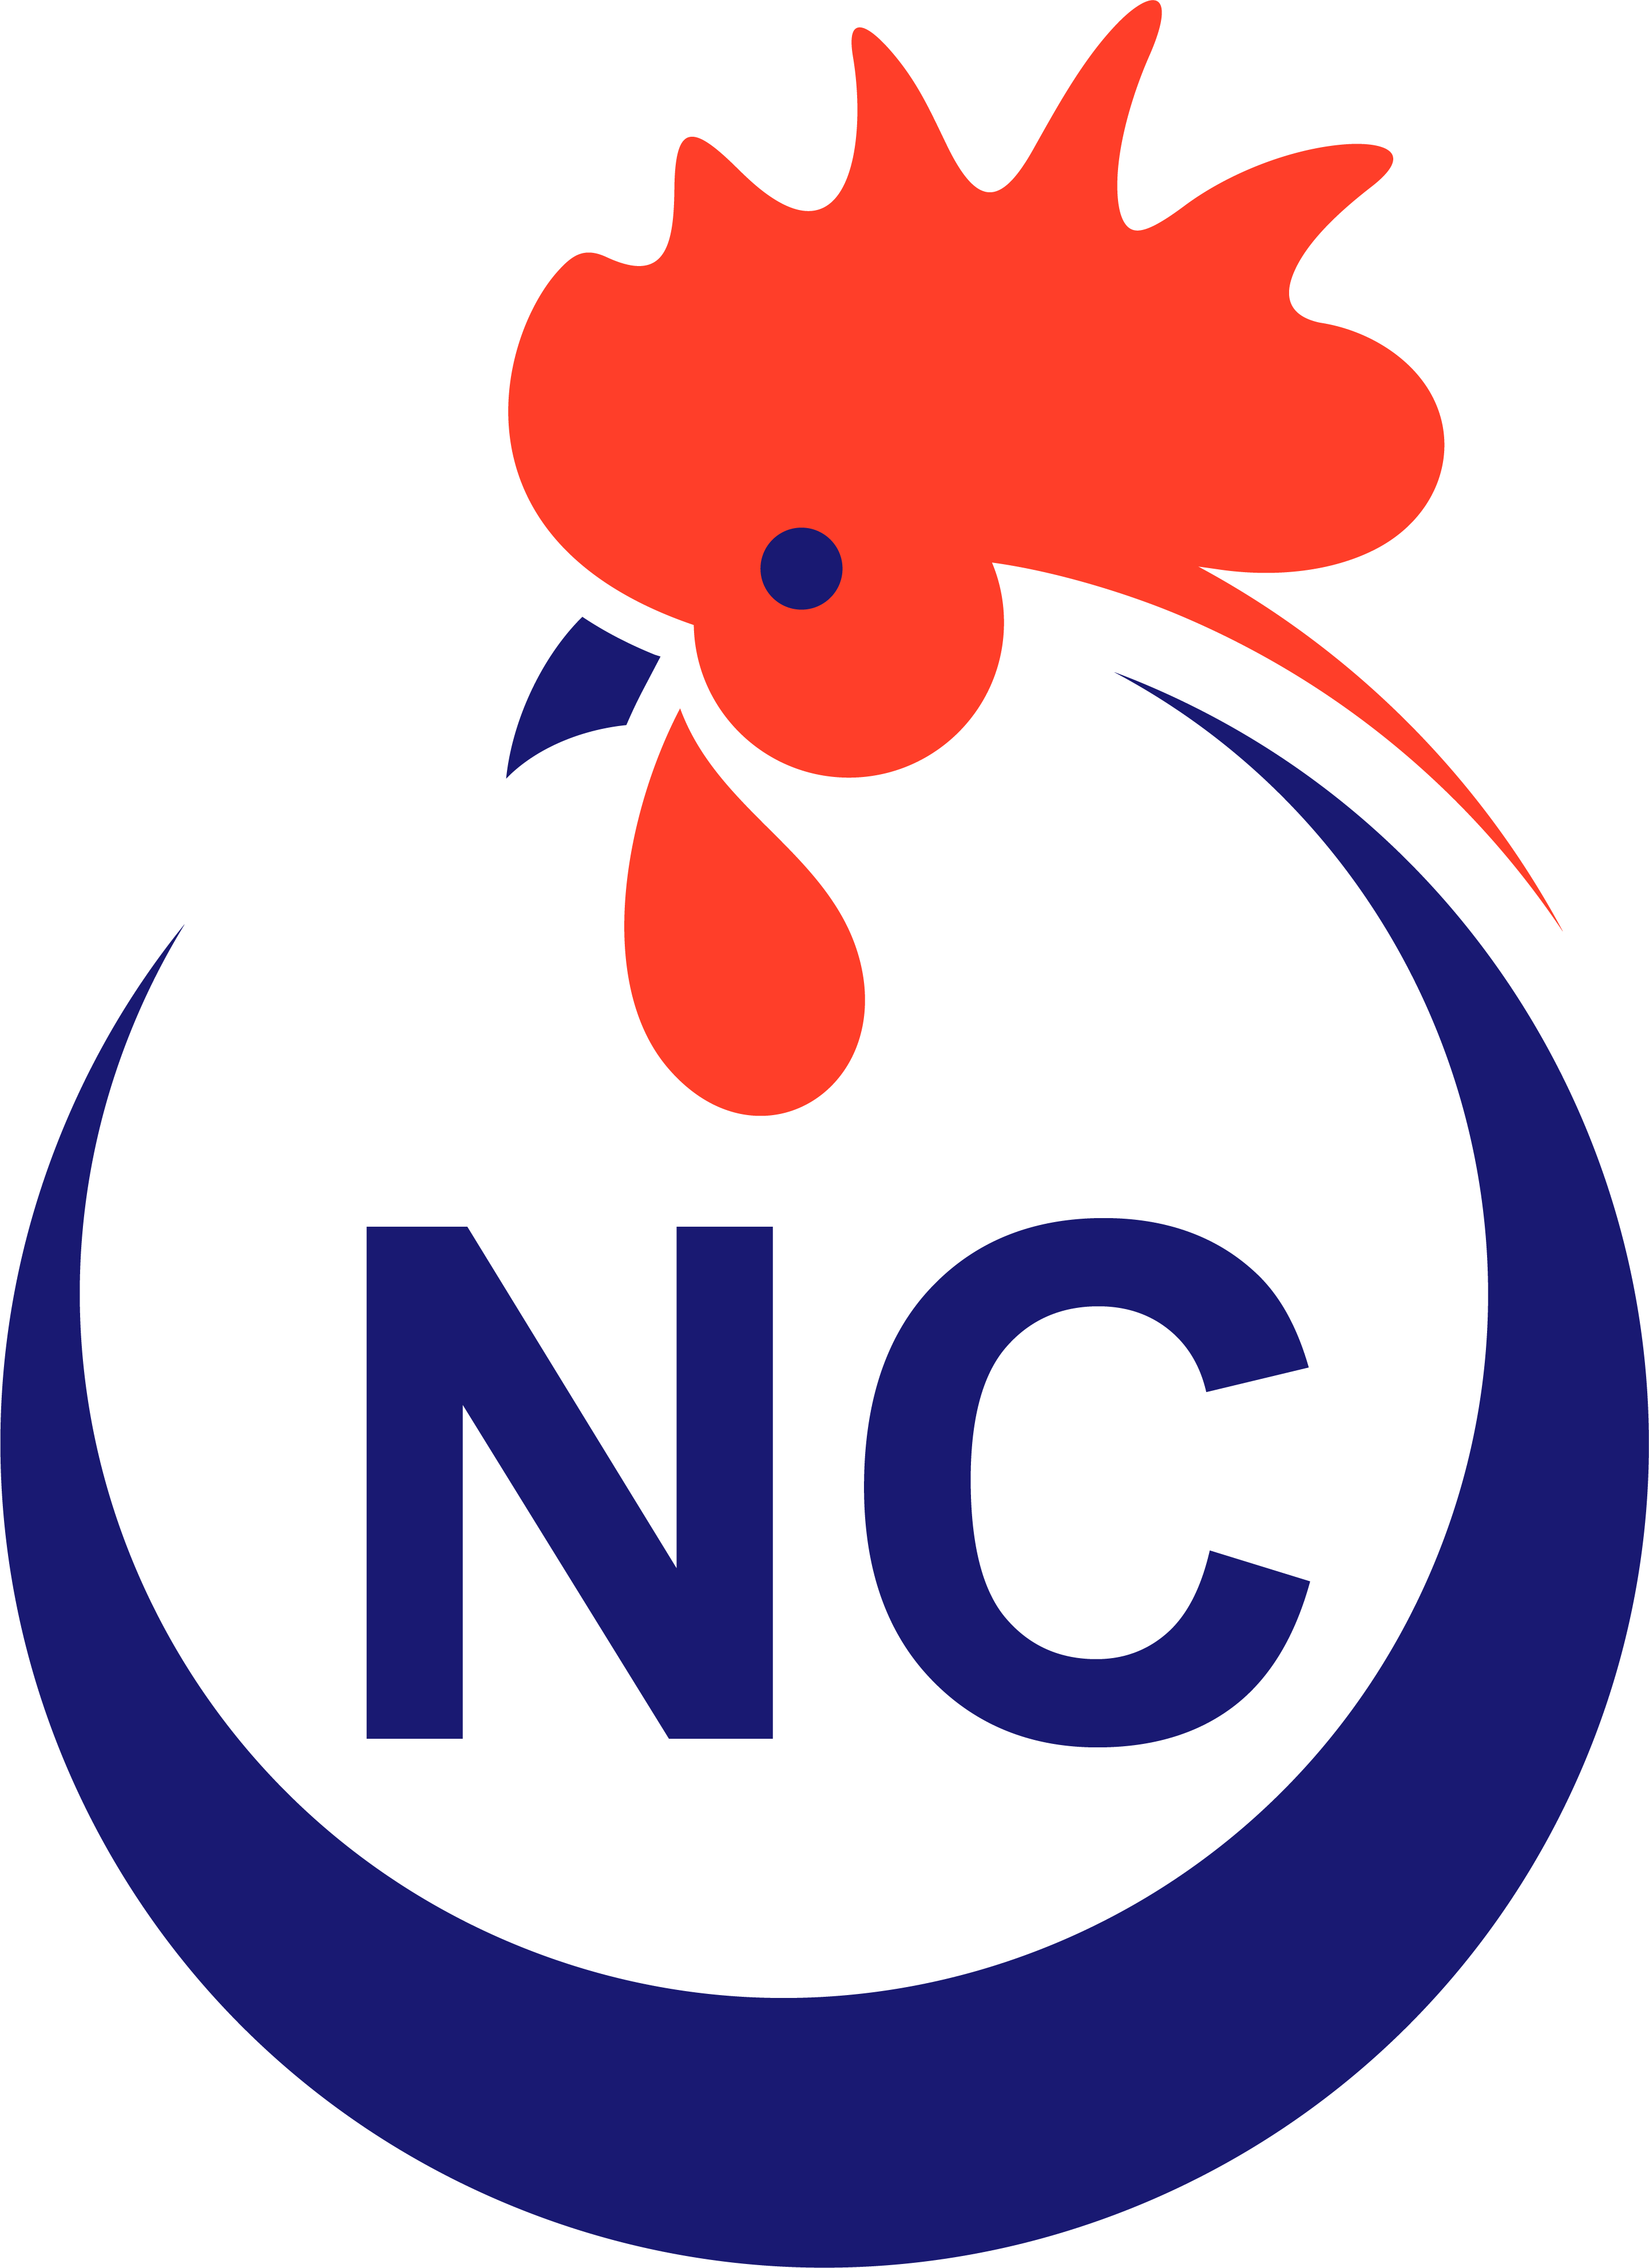 North Carolina rooster icon